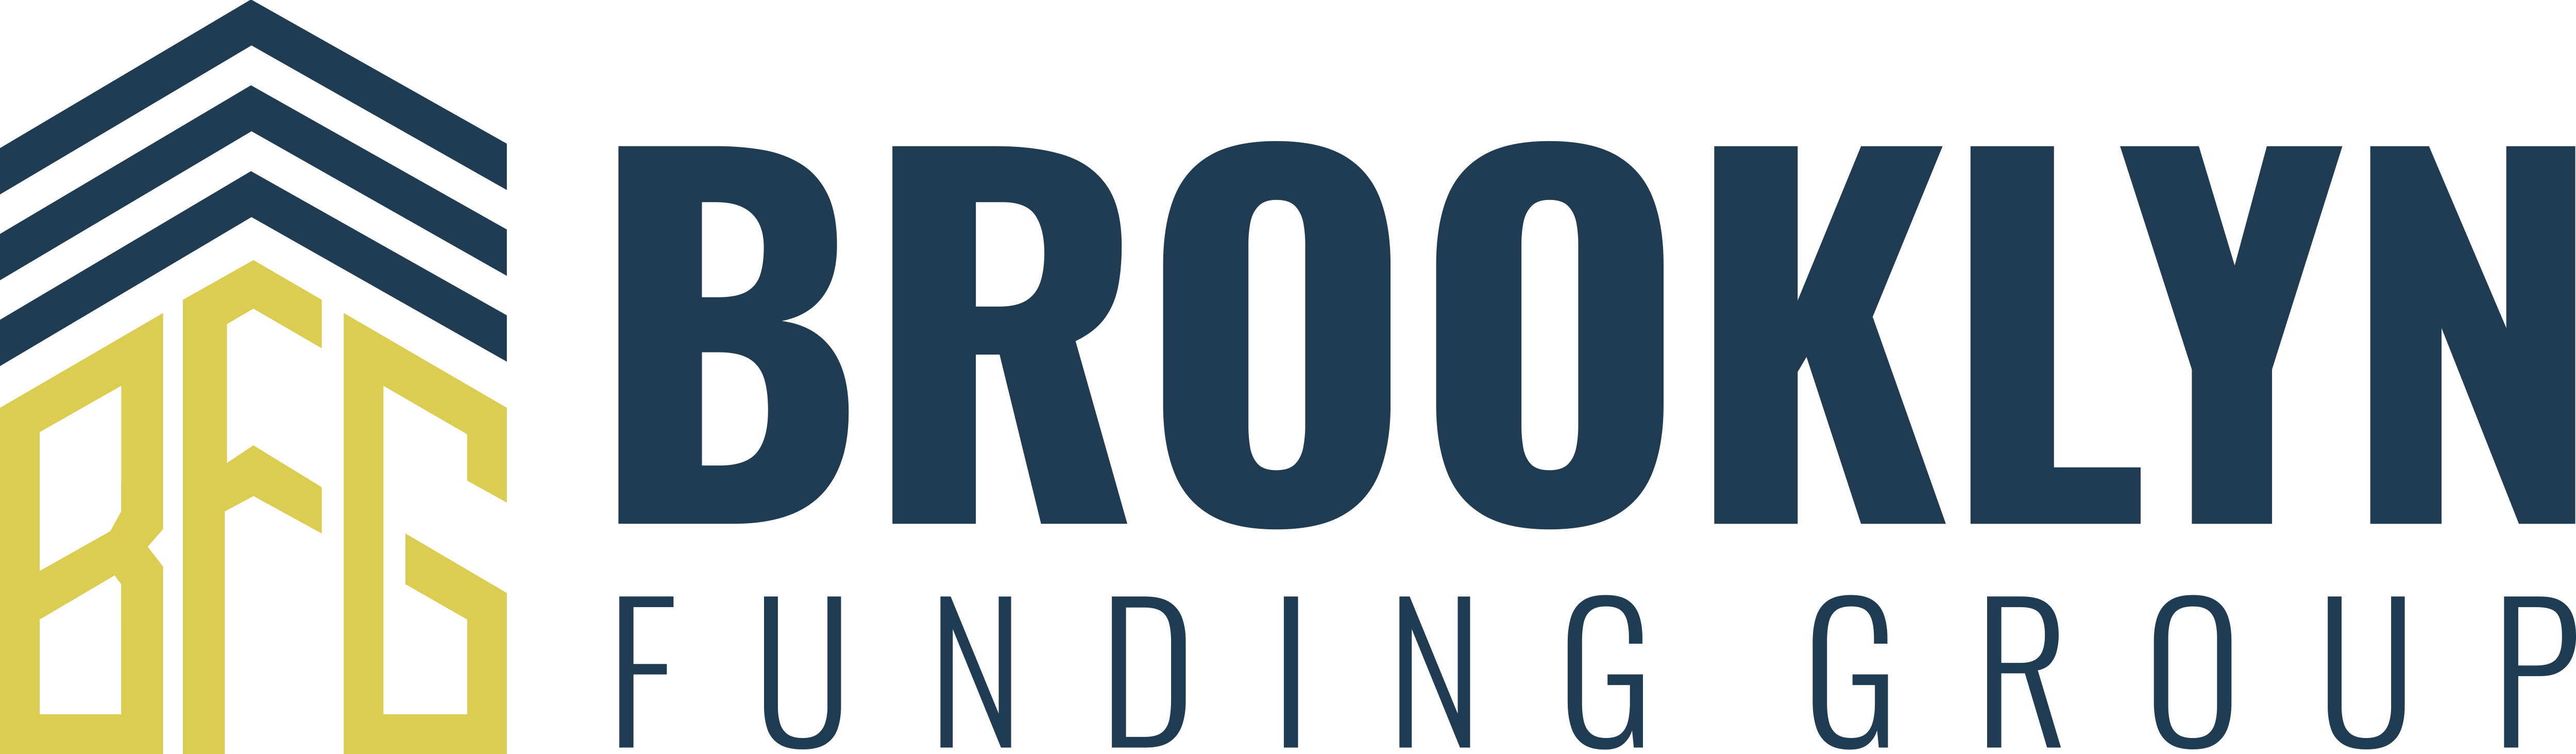 Brooklyn Funding Group